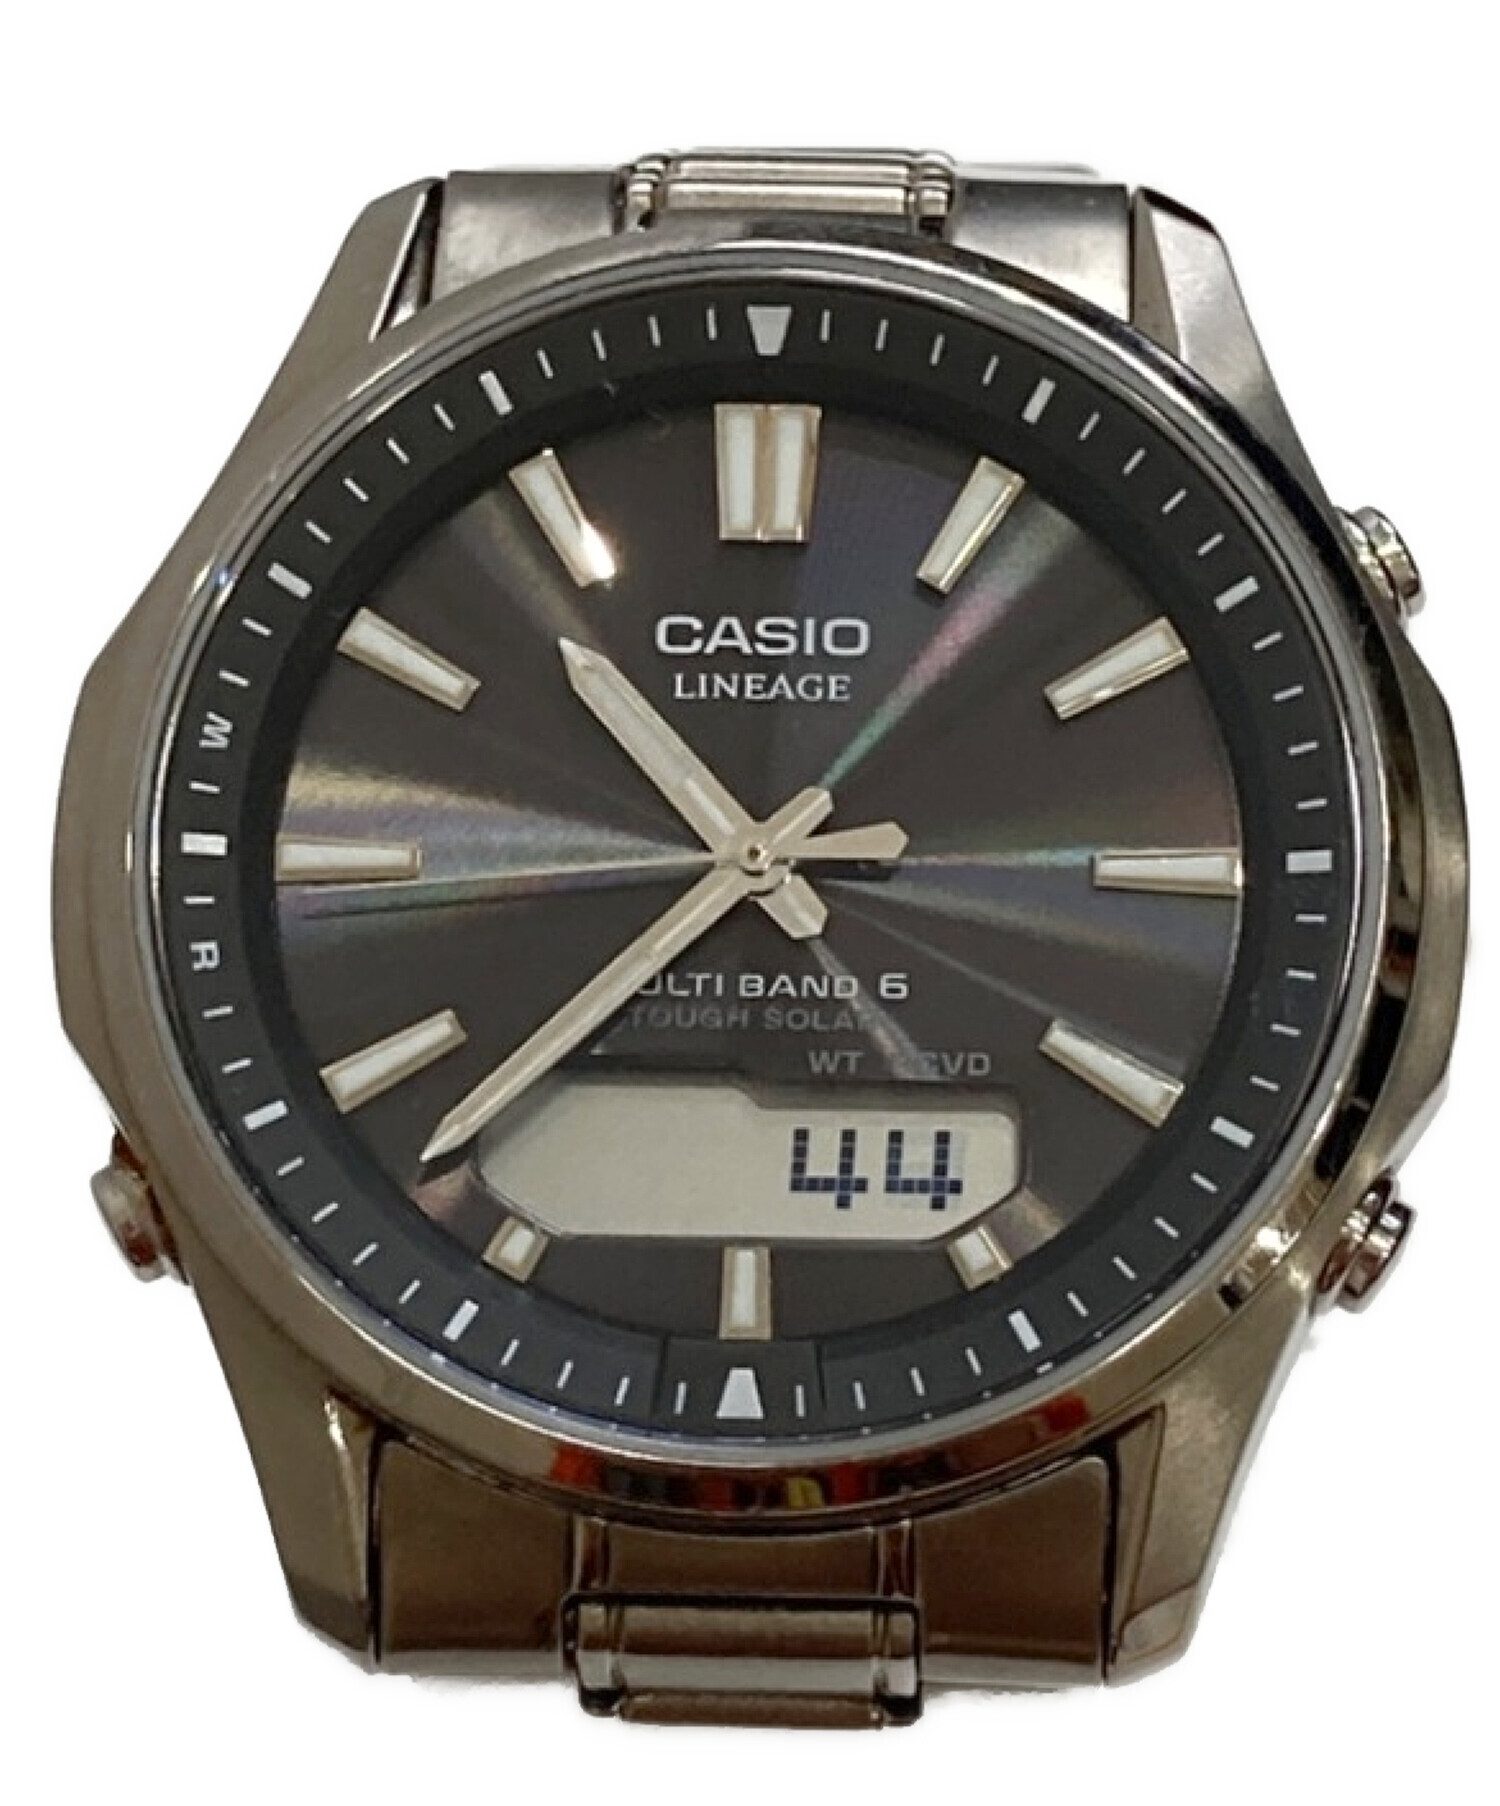 CASIO(カシオ) LCW-M100TSE-1AJF LINEAGE(リニエージ) 国内正規品 ソーラー メンズ 腕時計 福袋特集 - メンズ腕時計